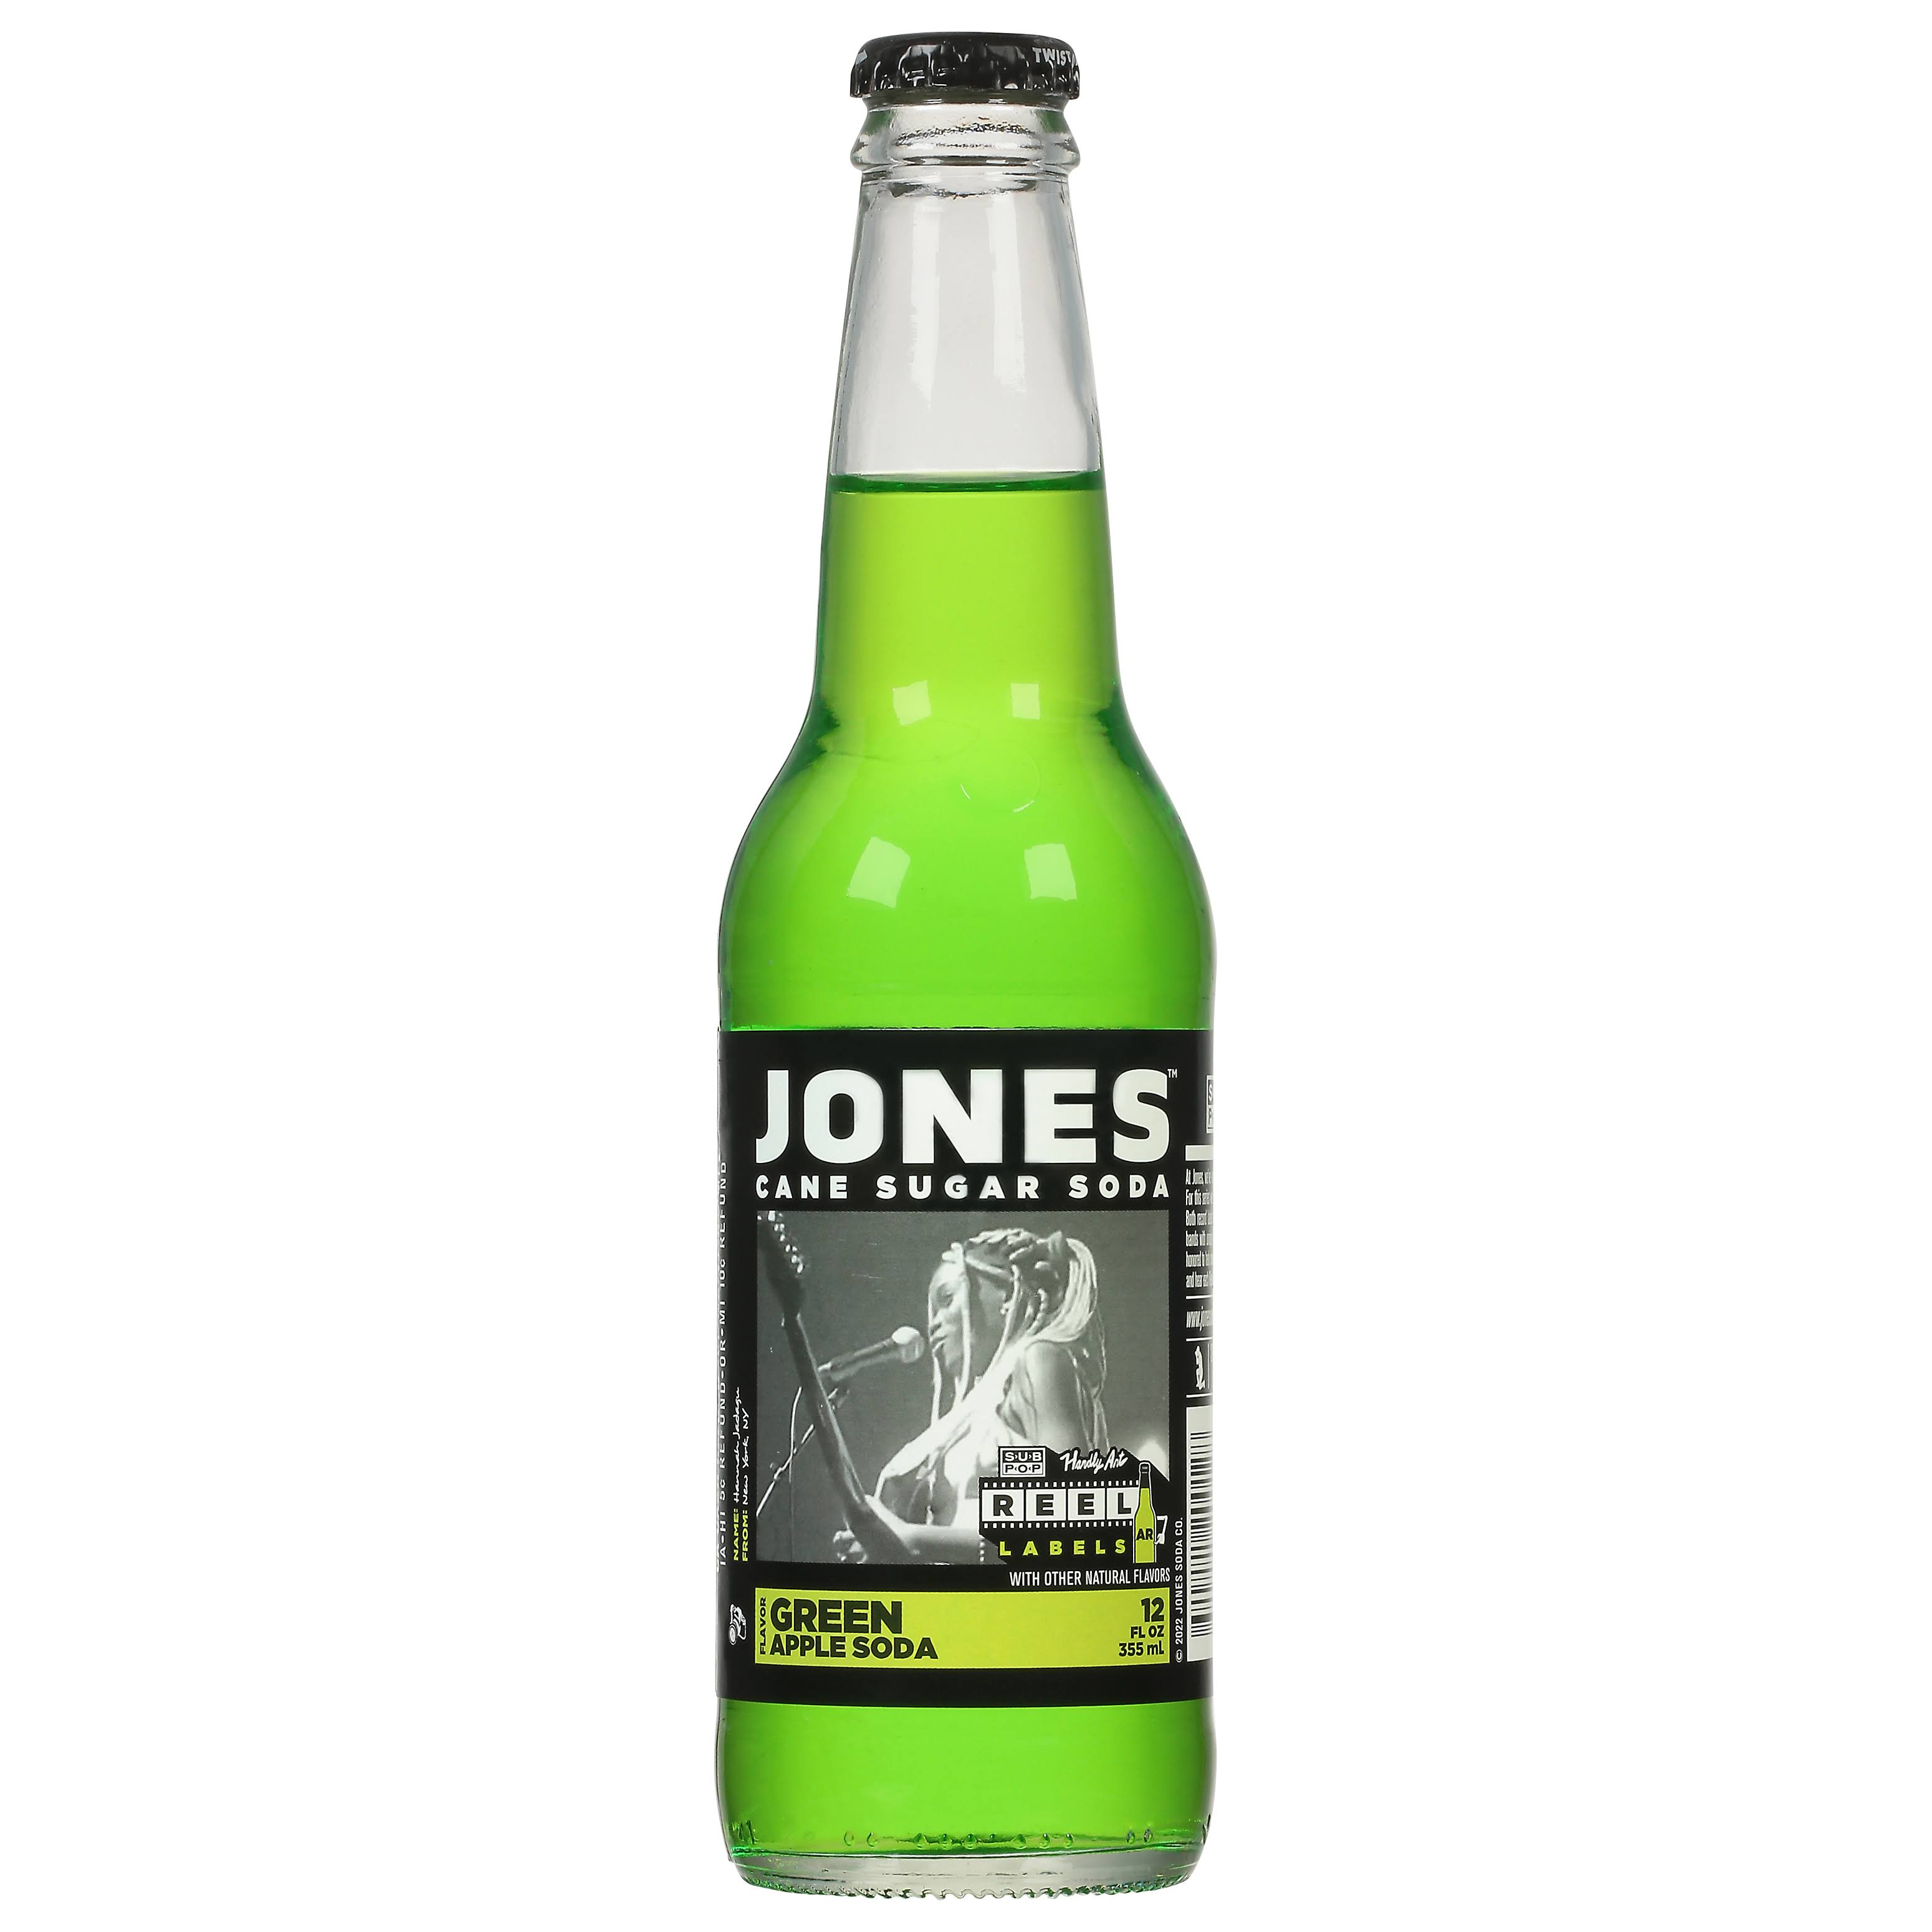 Jones Cane Sugar Soda - Green Apple